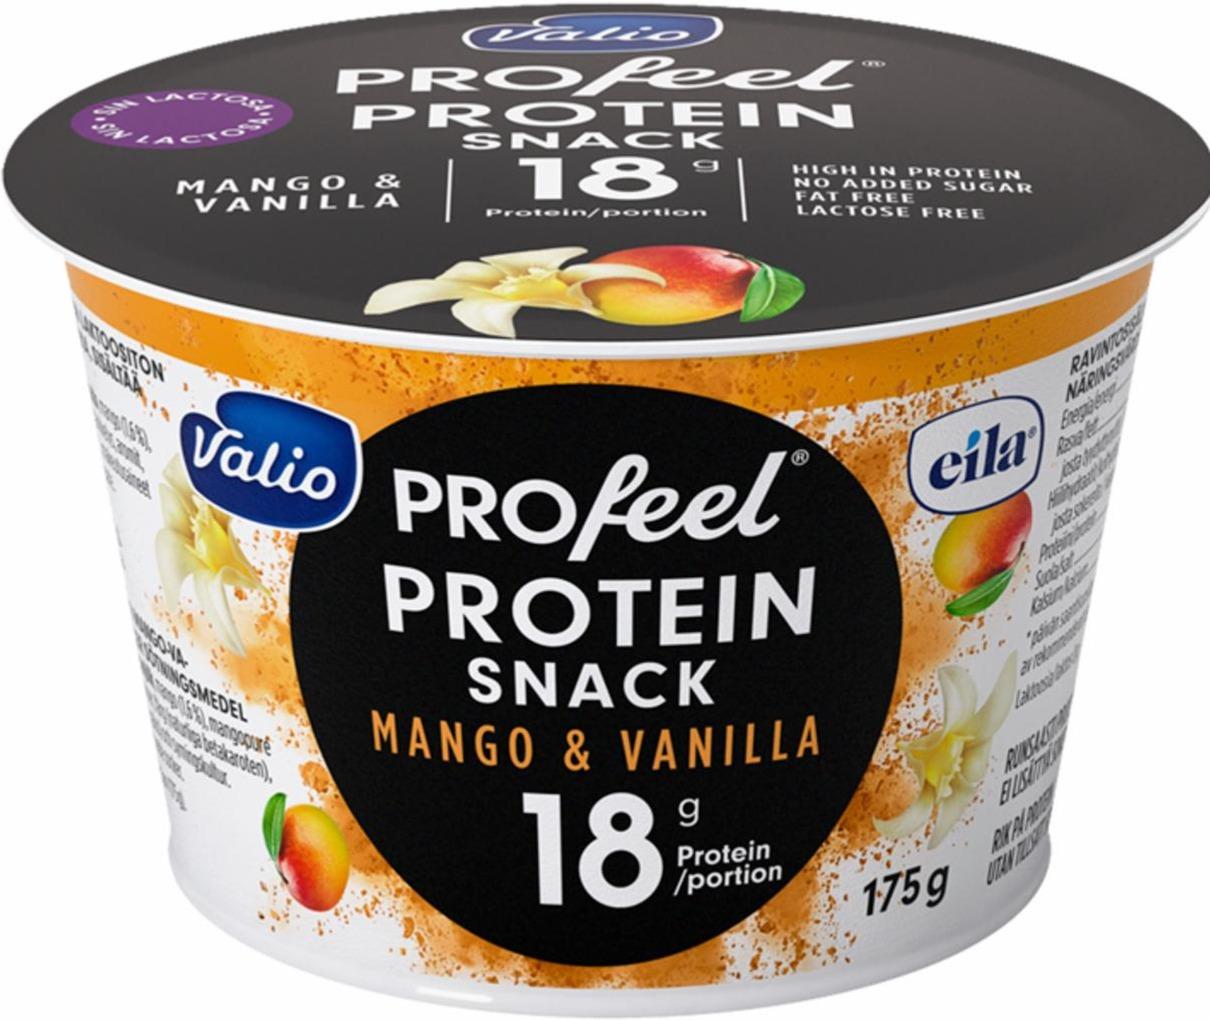 Fotografie - protein snack mango Vanilla Valio profeel